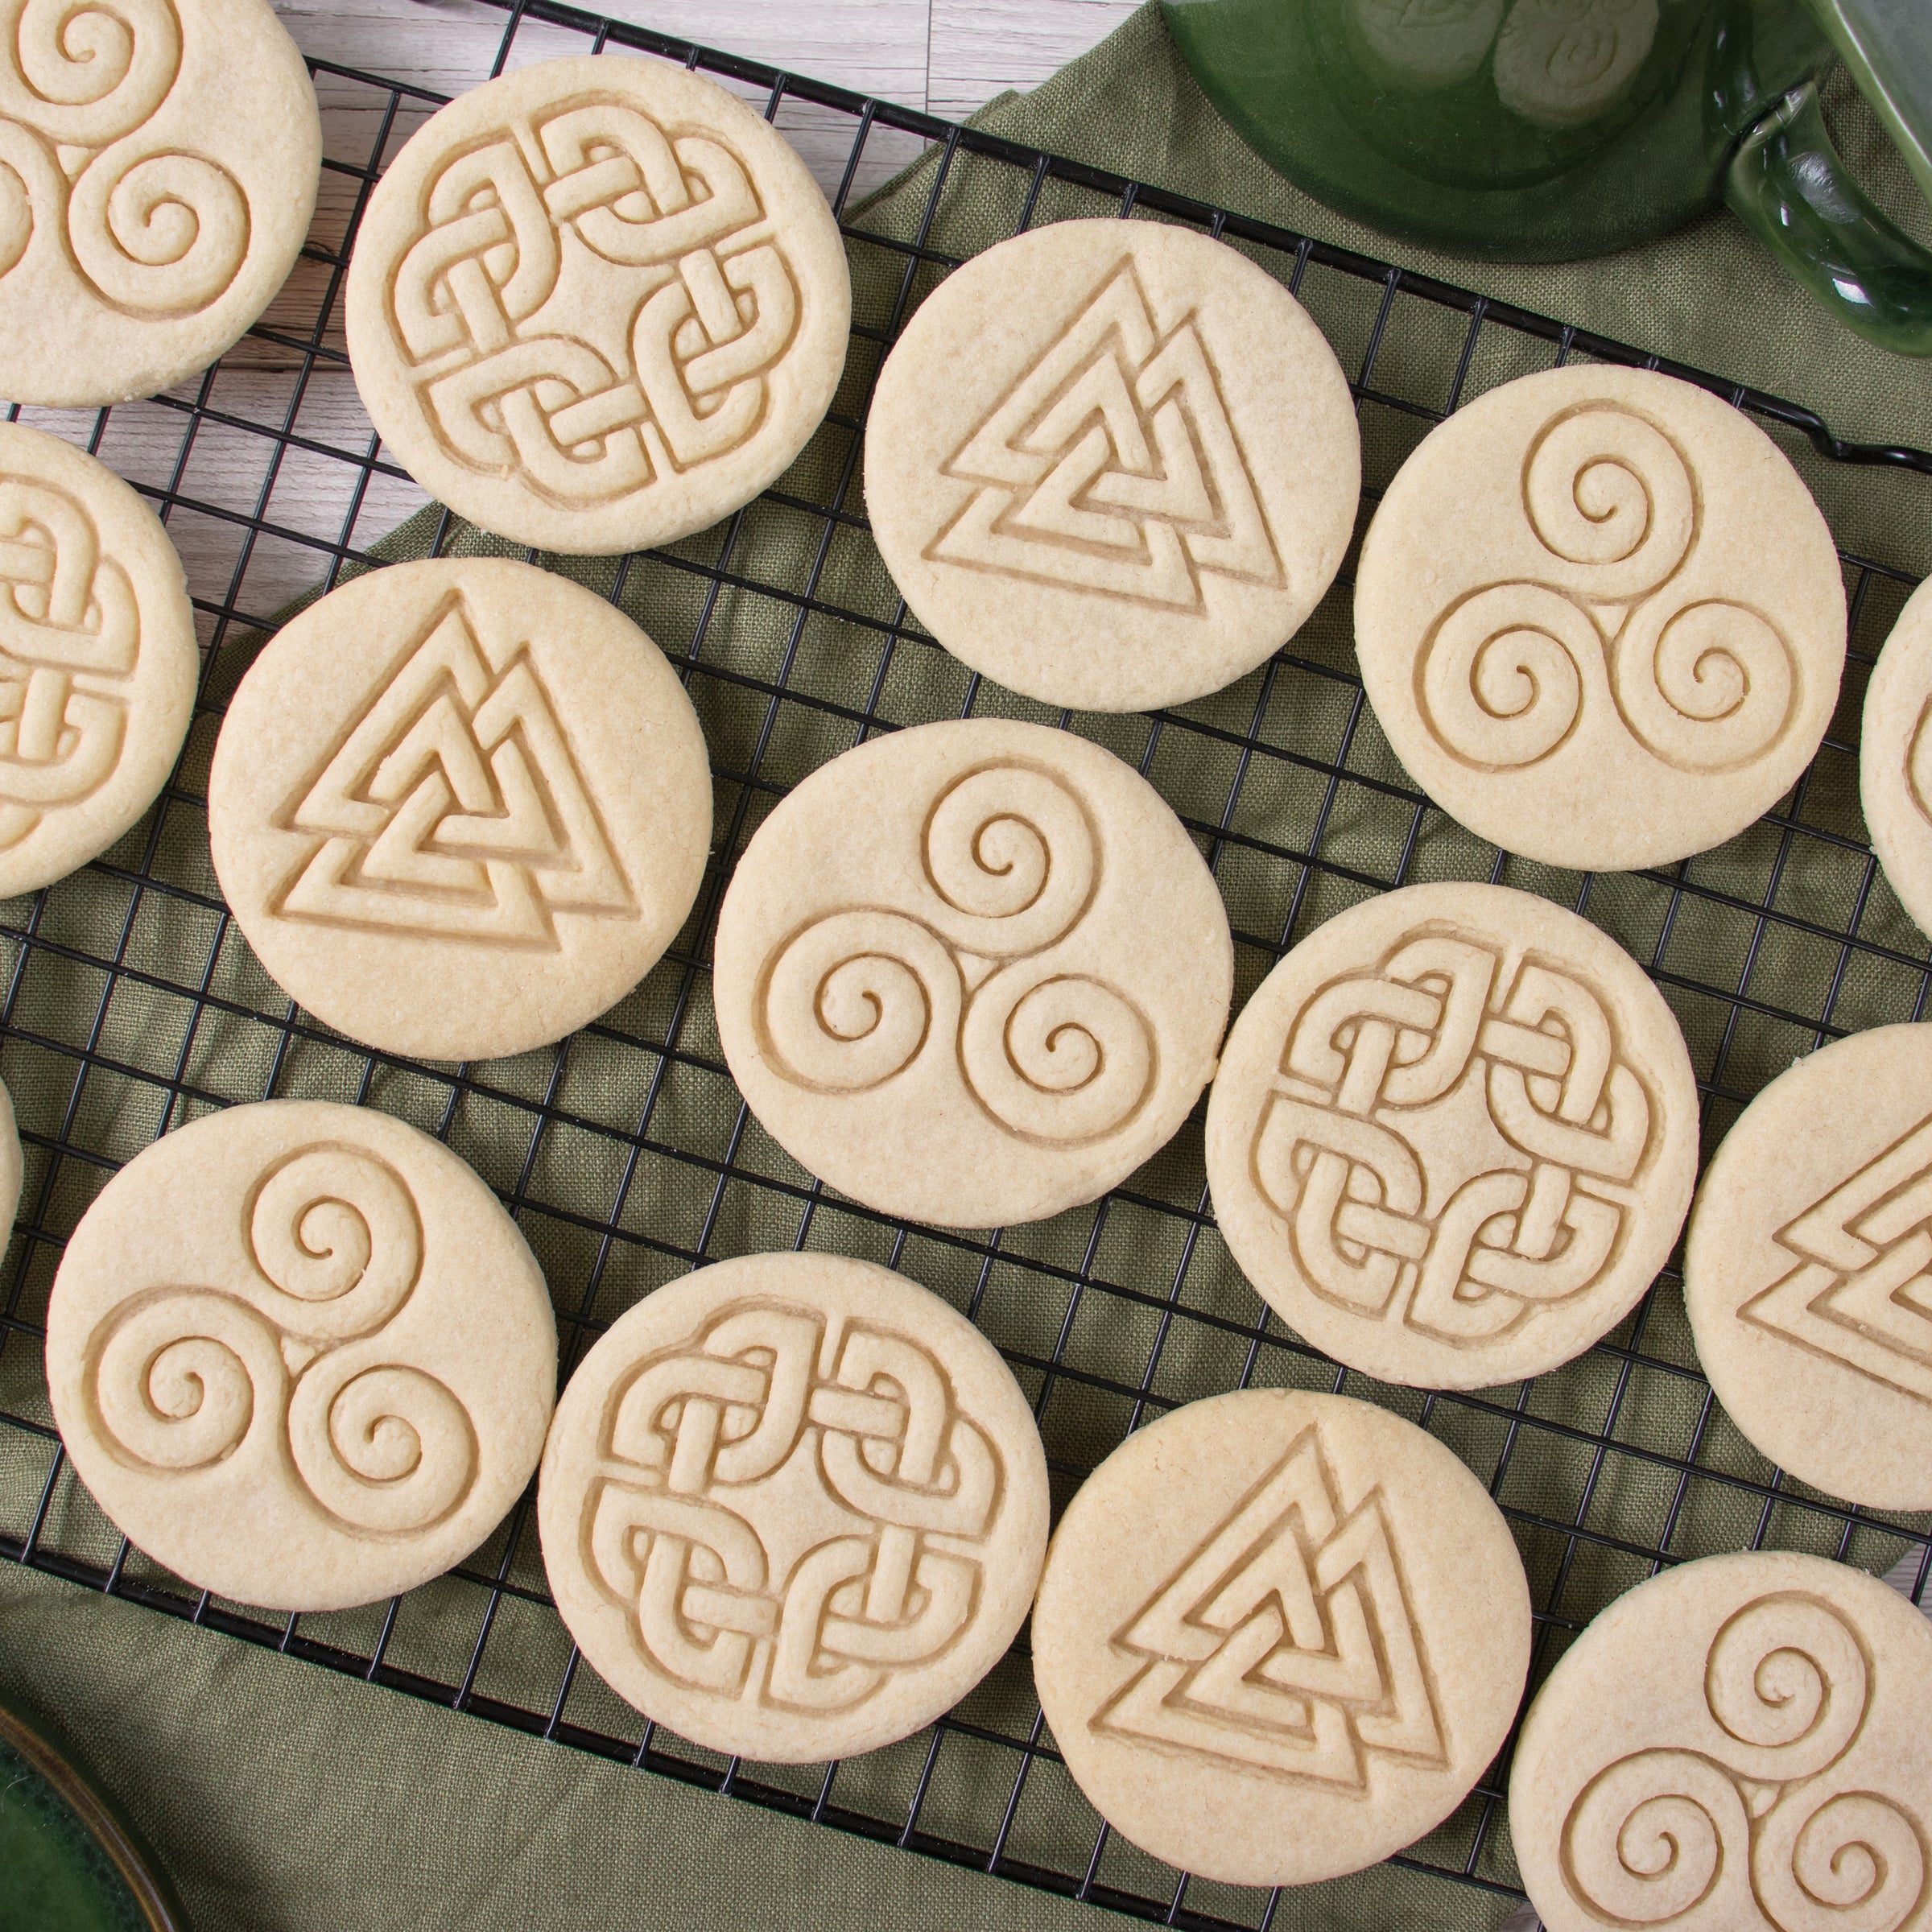 Set of 3 Nordic Runes Cookies: Celtic Shield Knot, Triskelion, & Valknut